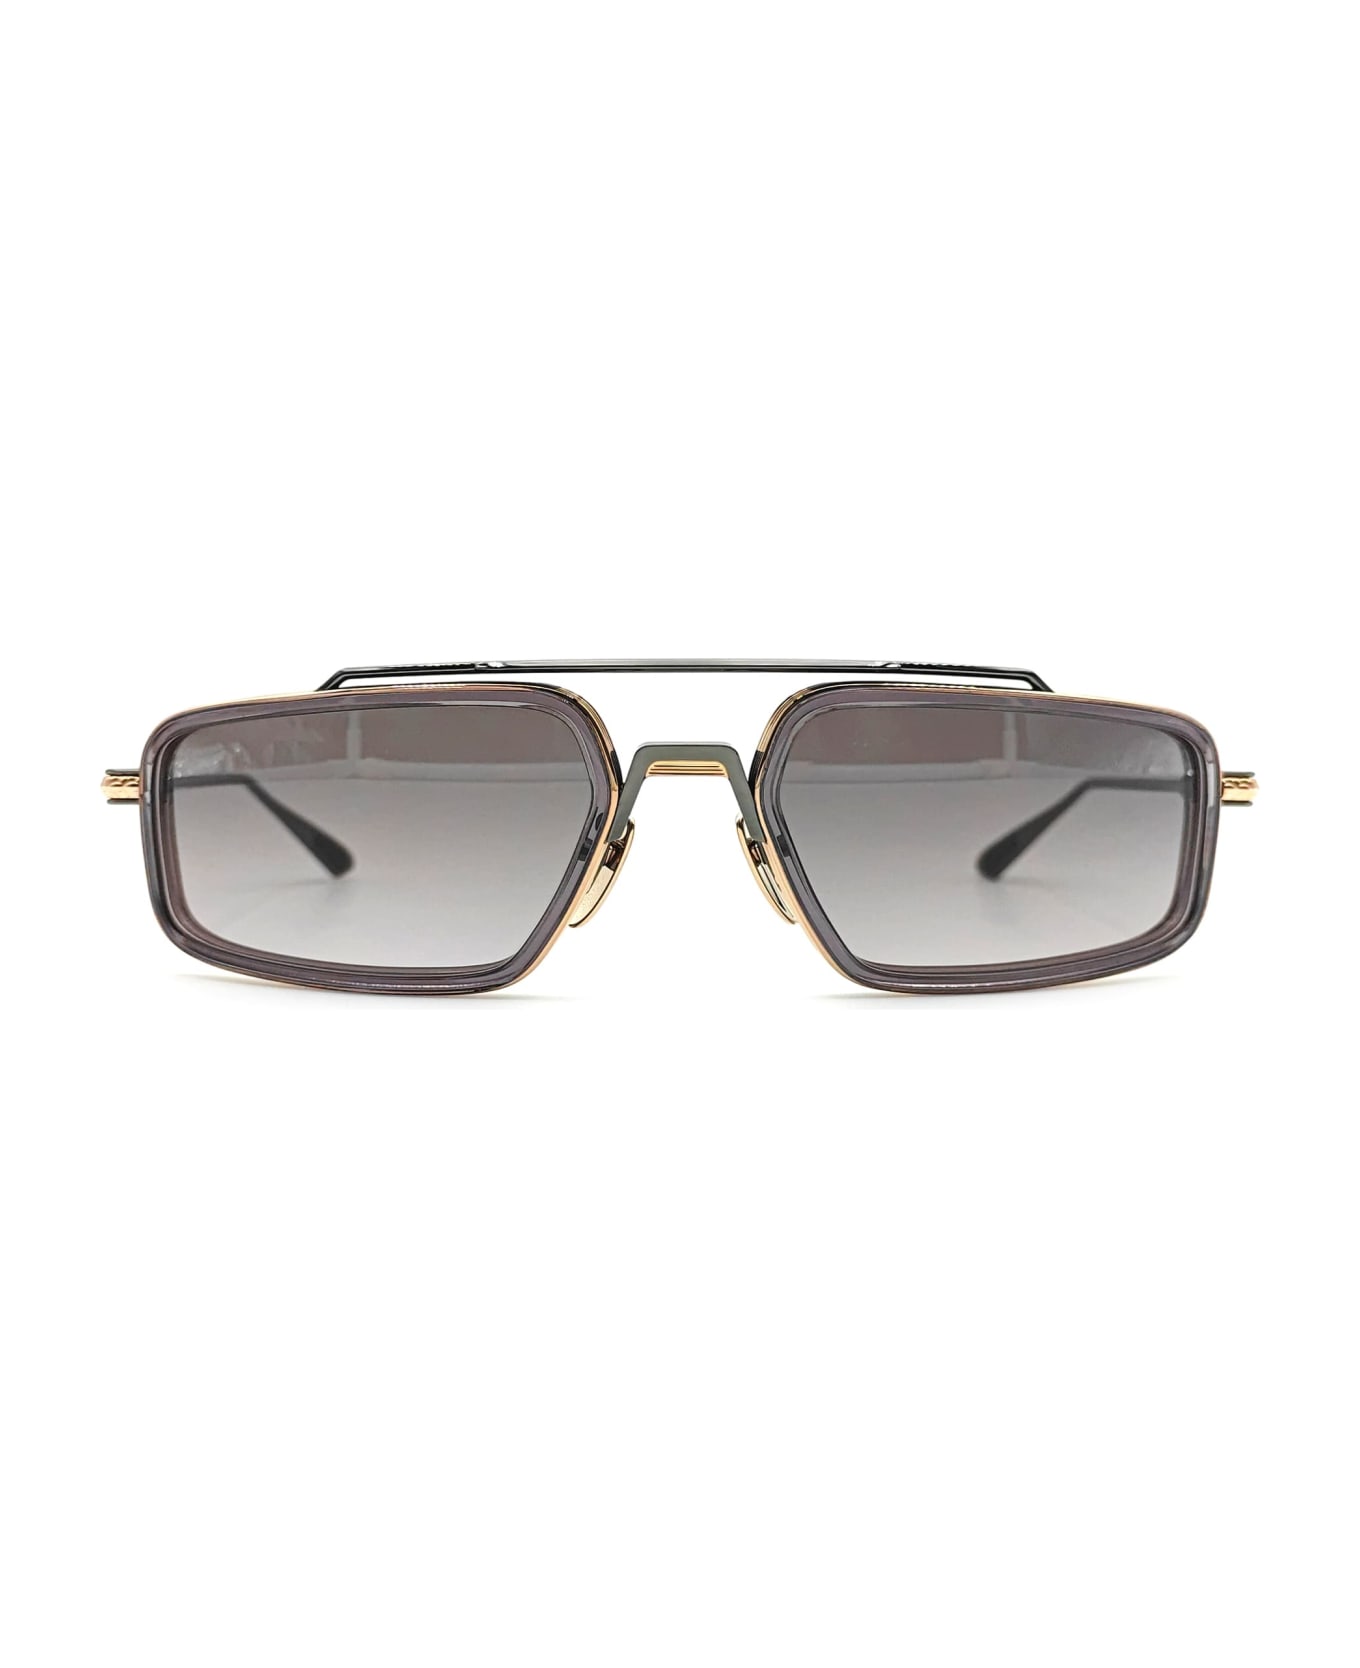 Chrome Hearts Eader - Gold Plated / Gunmetal Sunglasses - gold/grey